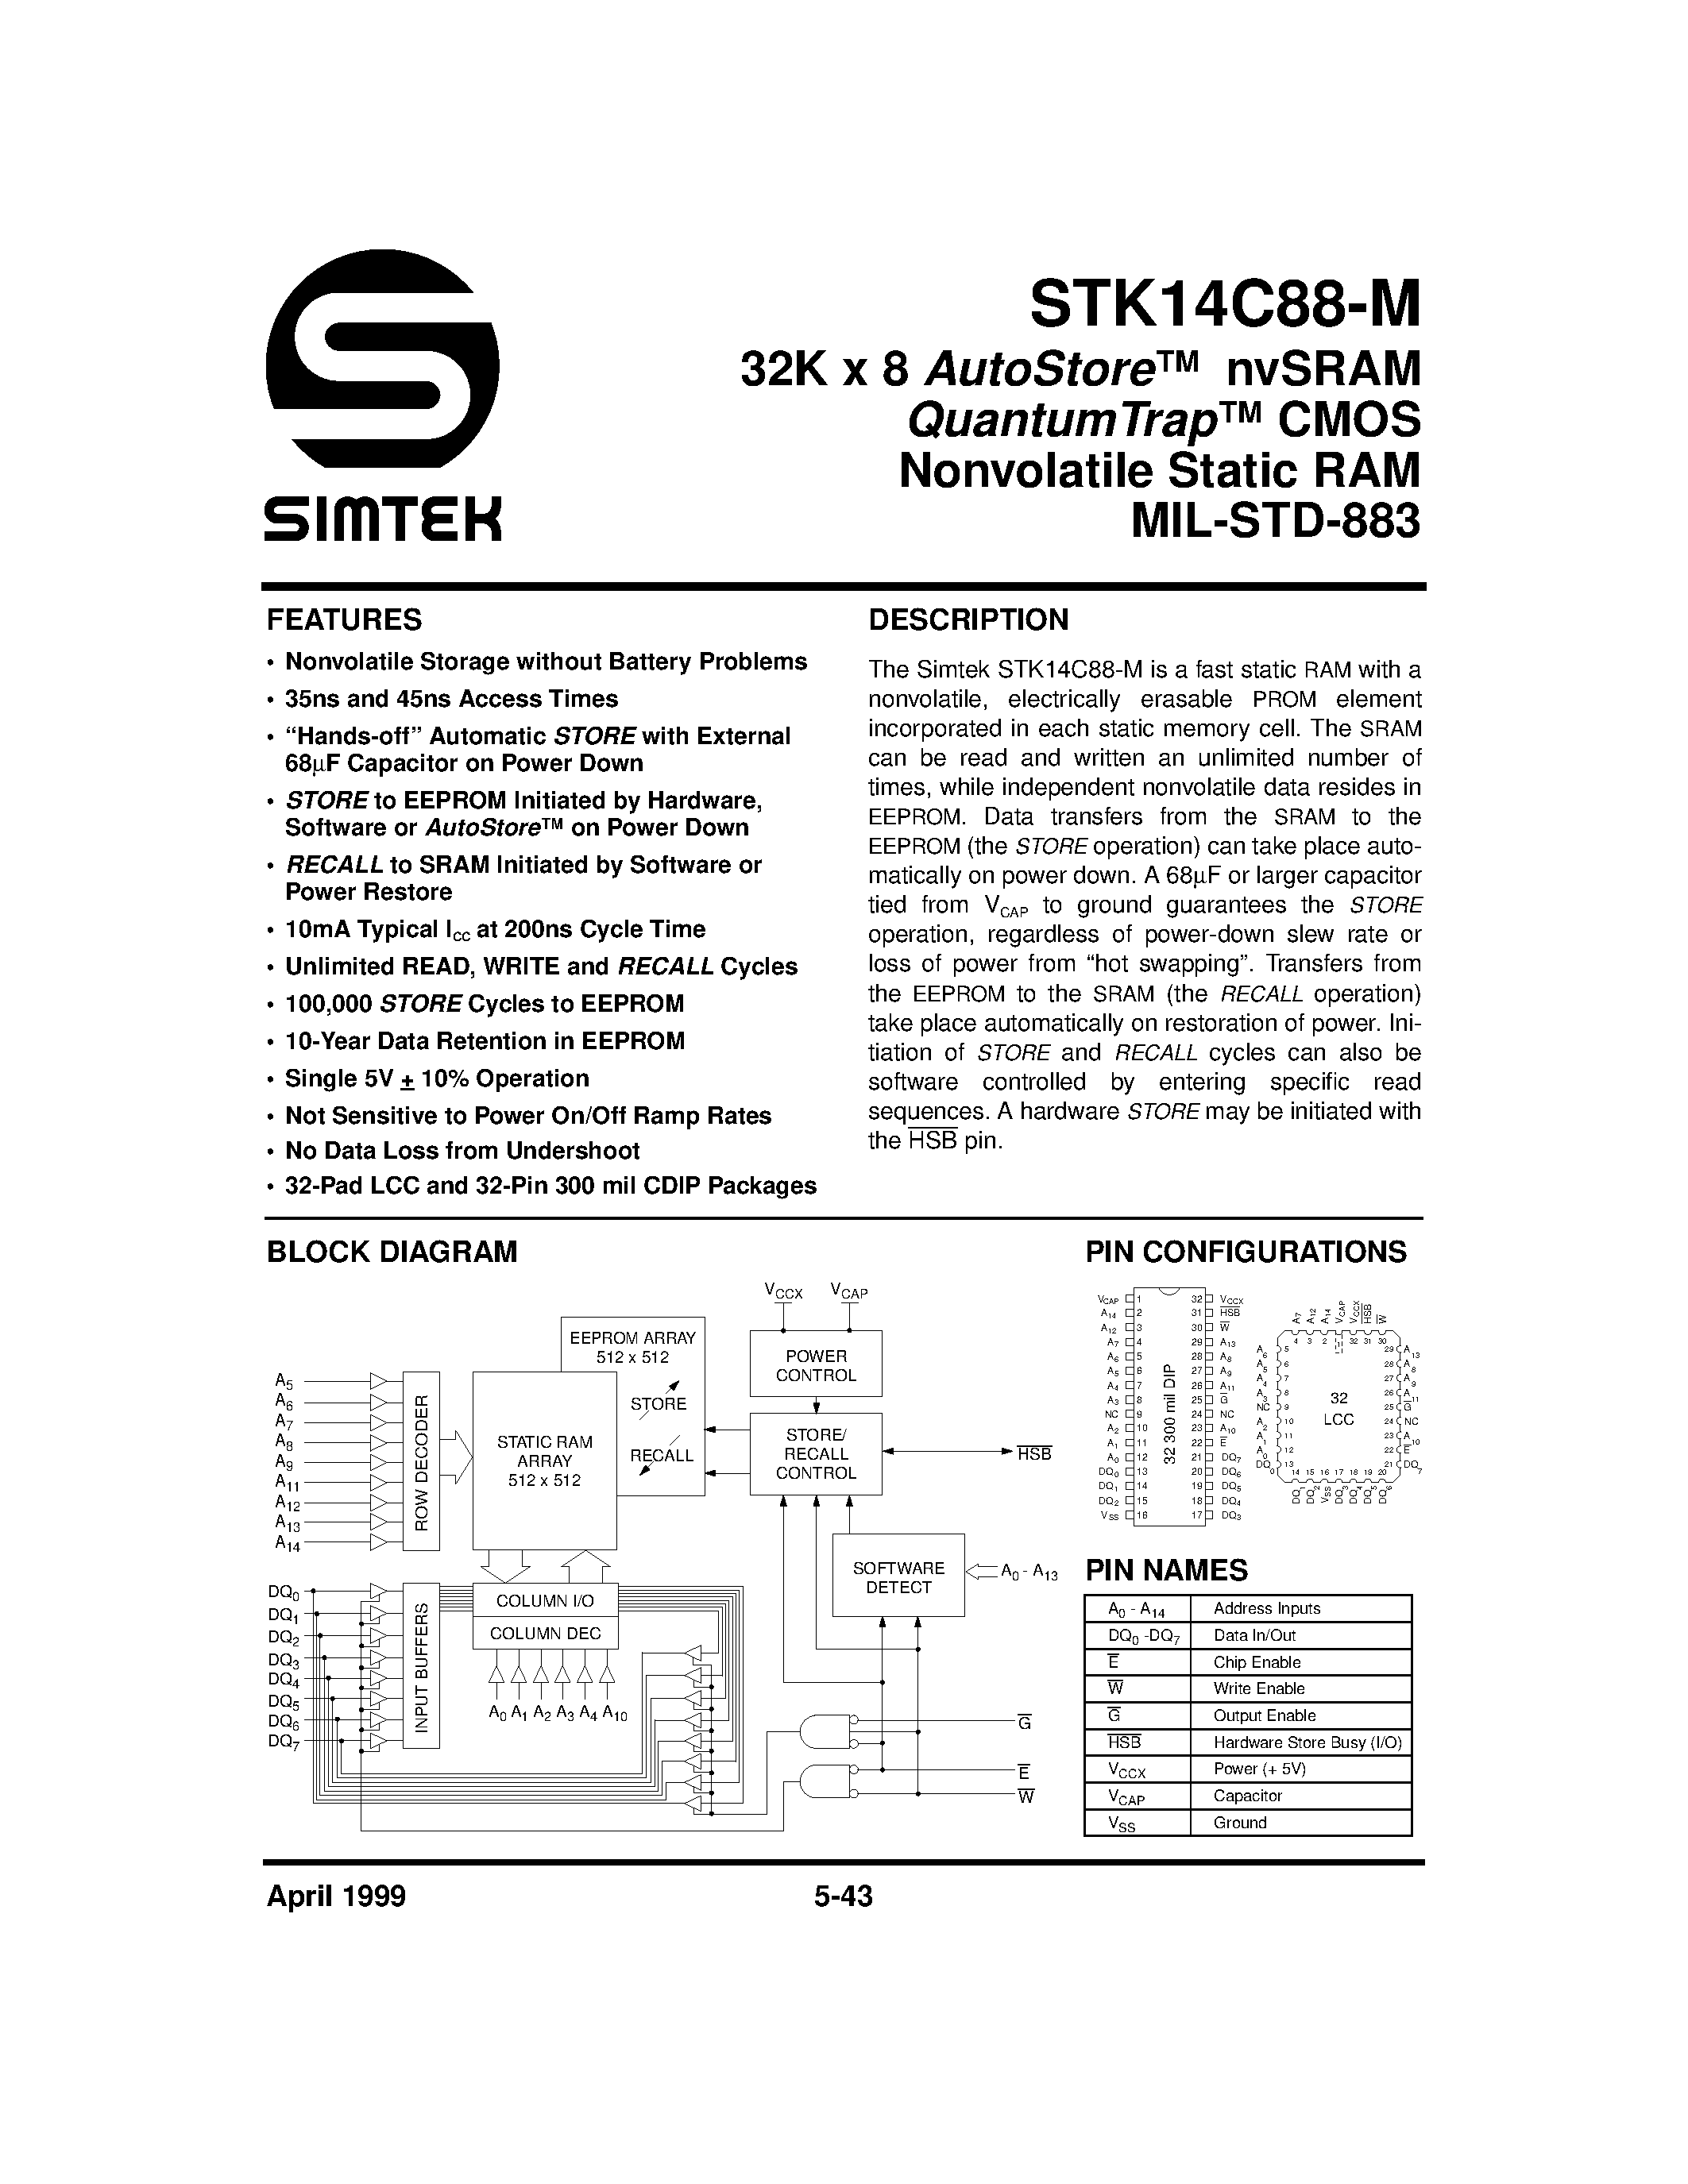 Даташит STK14C88-M - 32K x 8 AUTOSTORE nvSRAM QUANTUM TRAP CMOS NONVOLATILE STATIC RAM страница 1